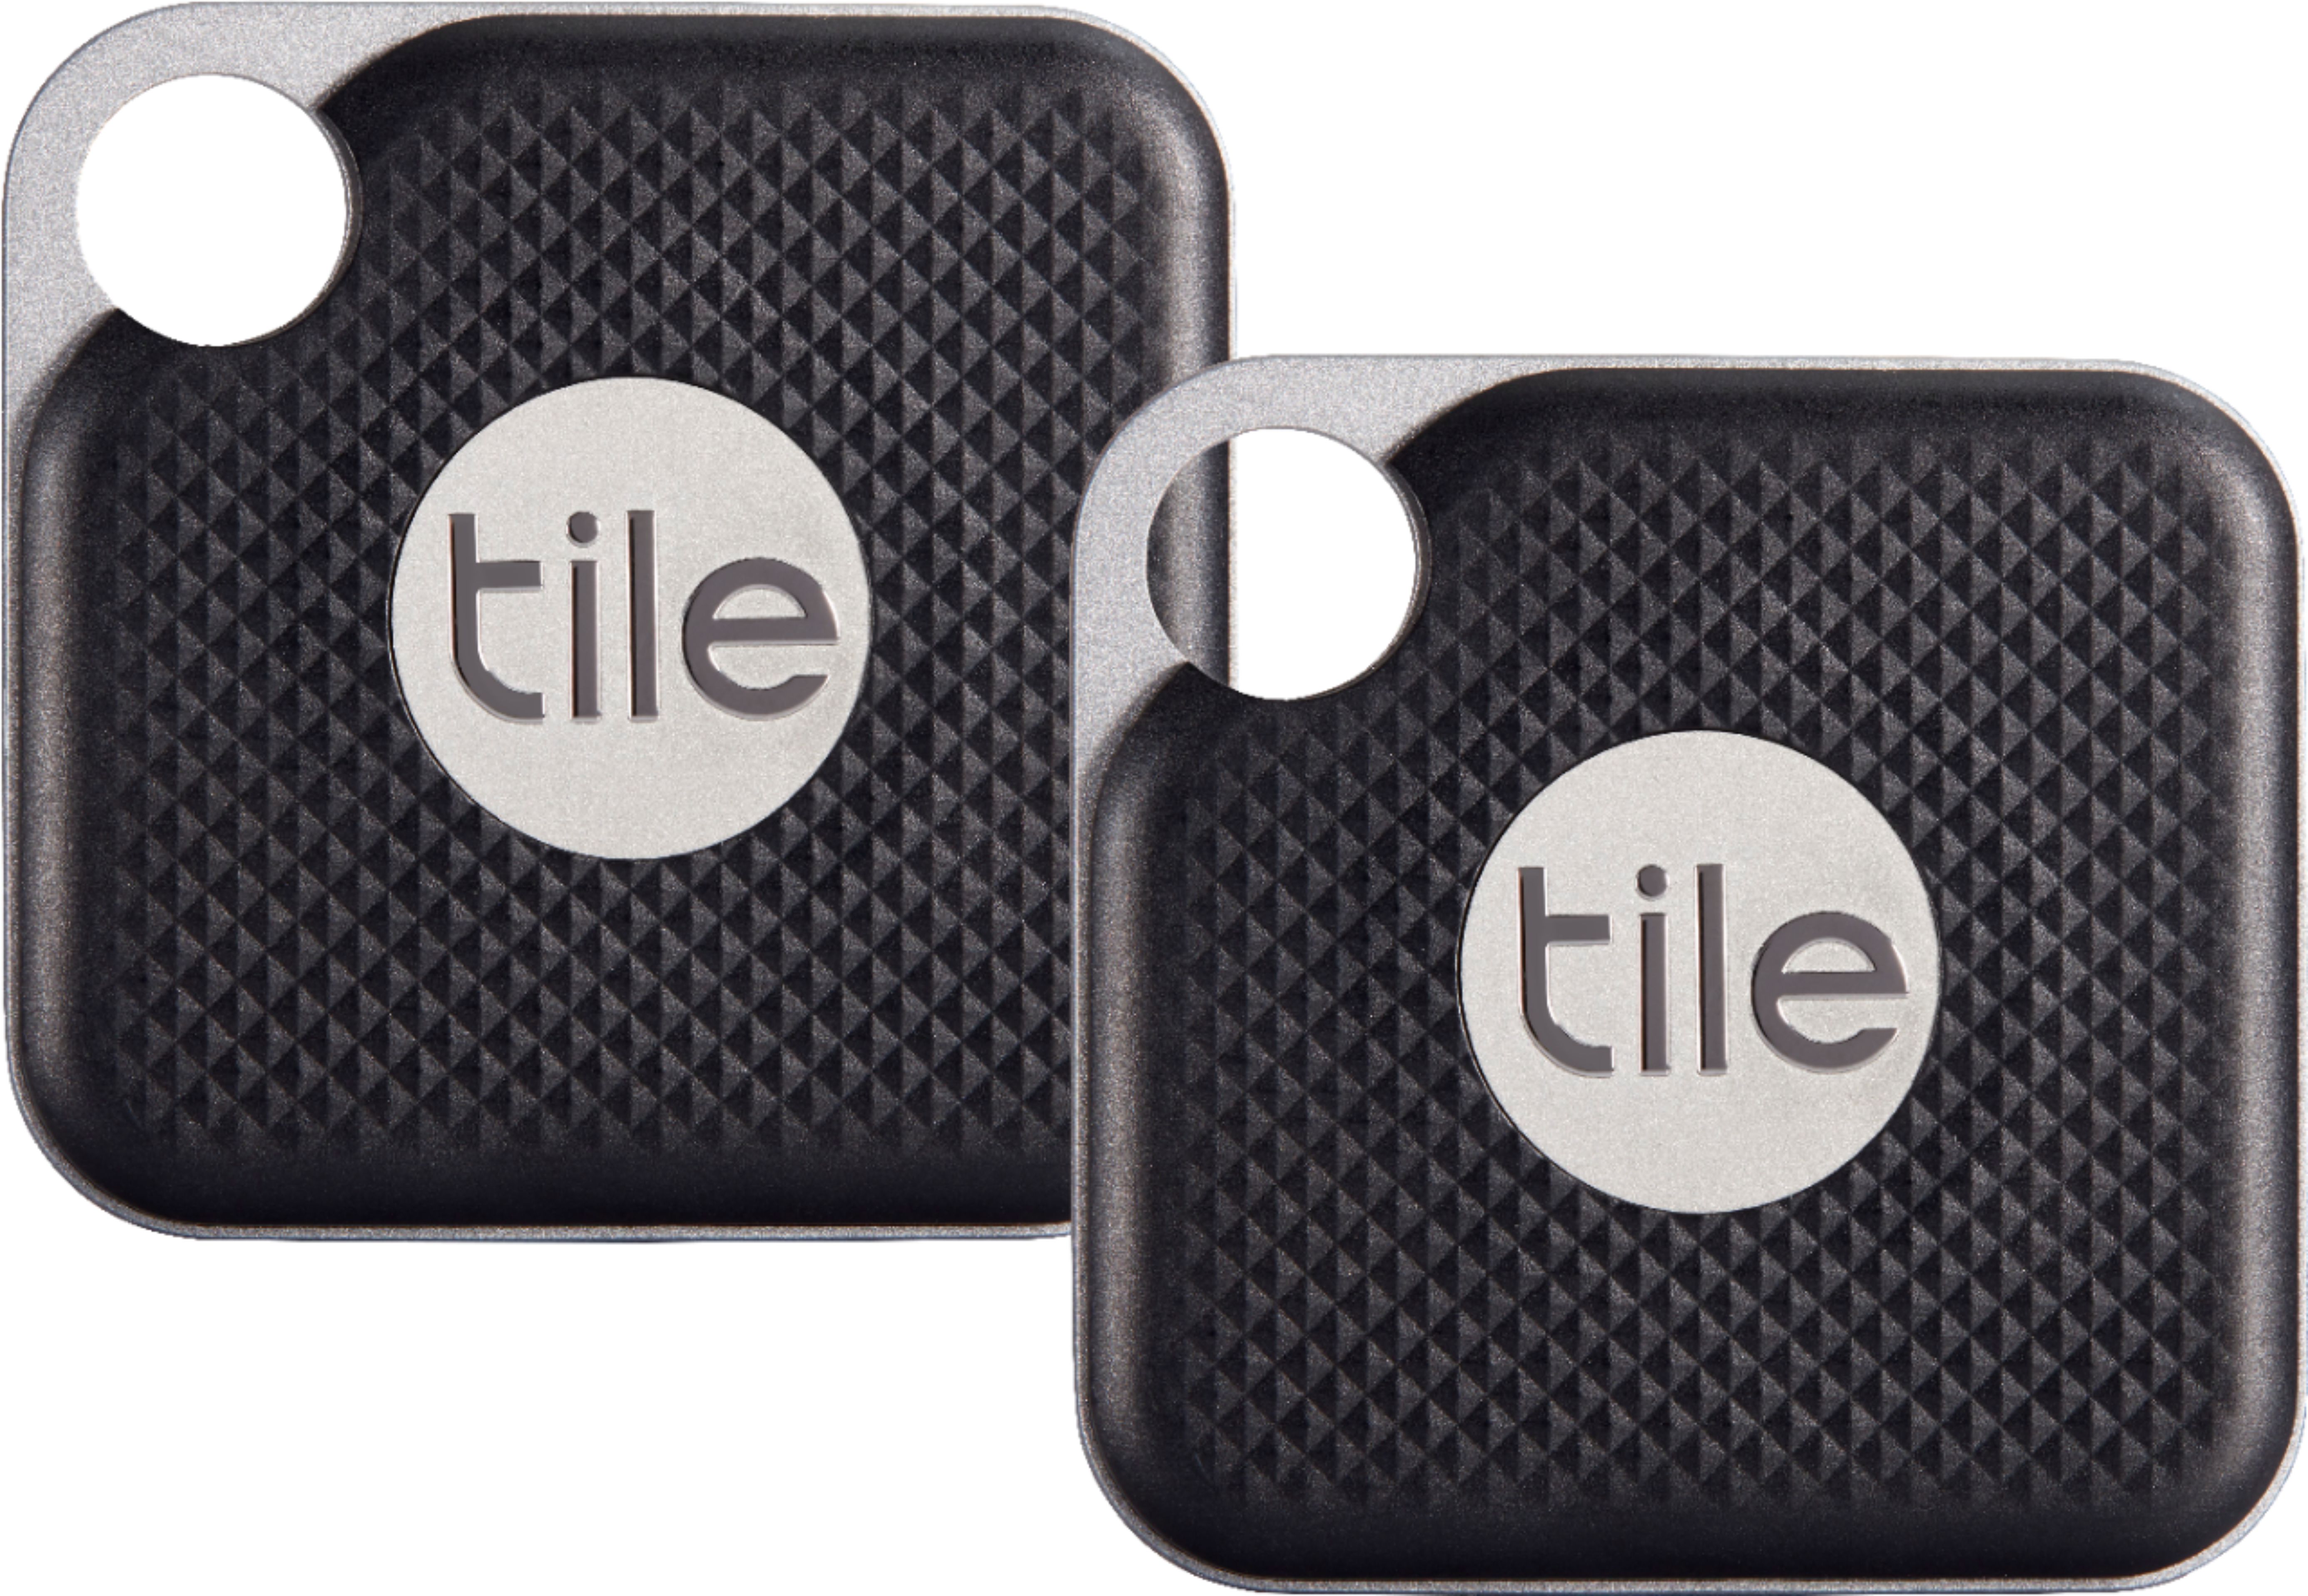 Tile - Pro (2018) Item Tracker (2-Pack) - Jet Black/Graphite